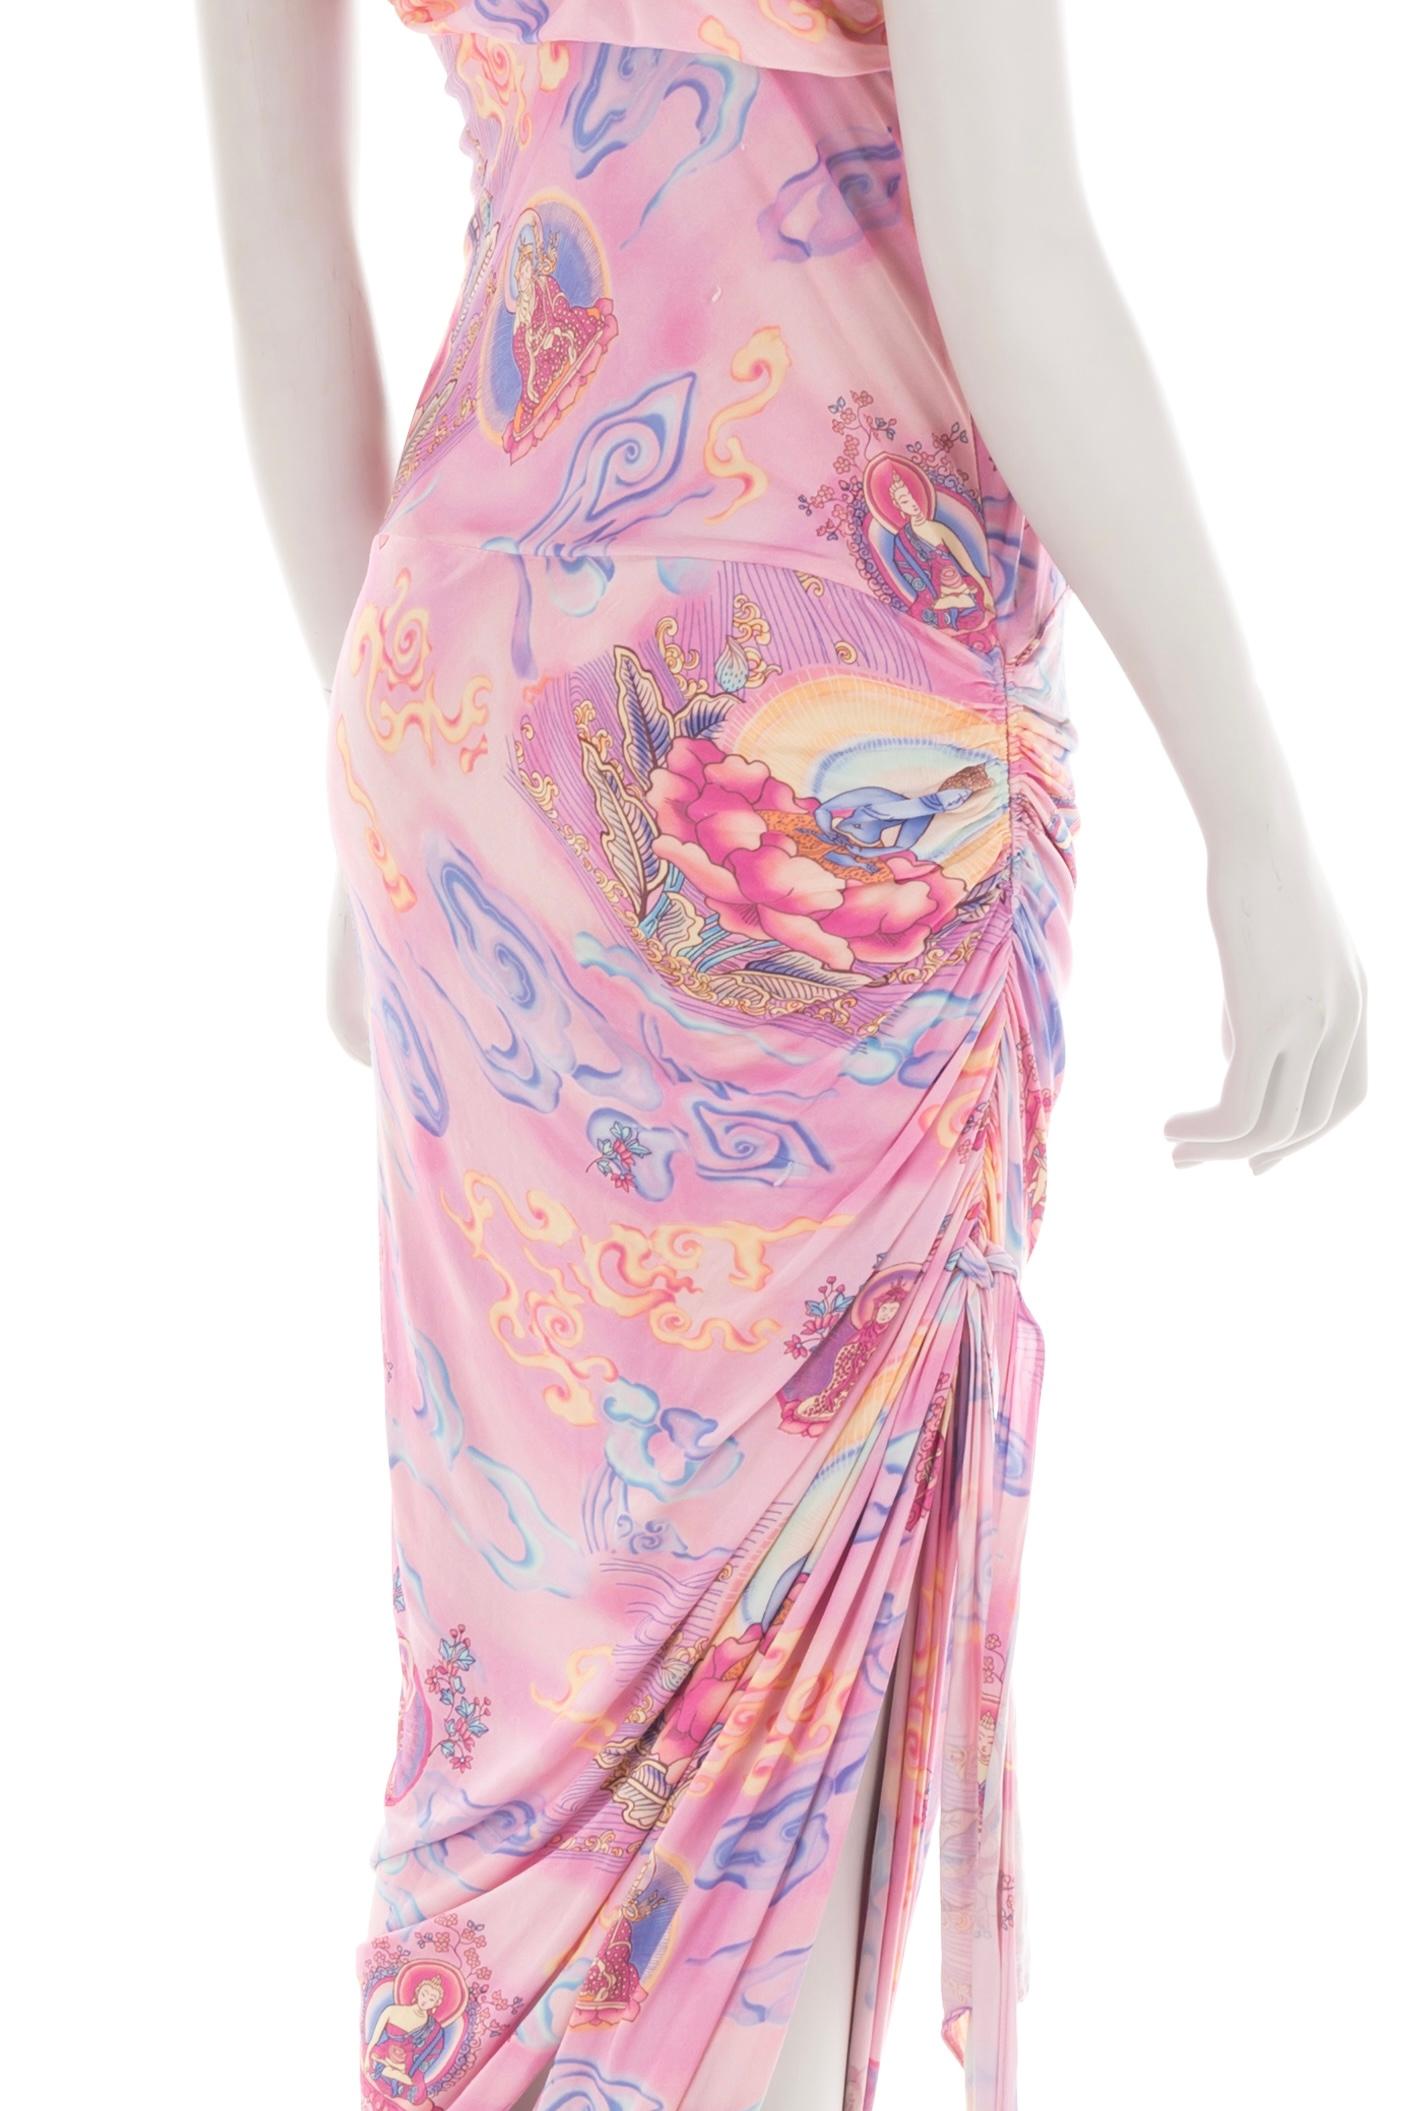 Emanuel Ungaro S/S 2004 pink “Shiva” print draped cut-out dress For Sale 3